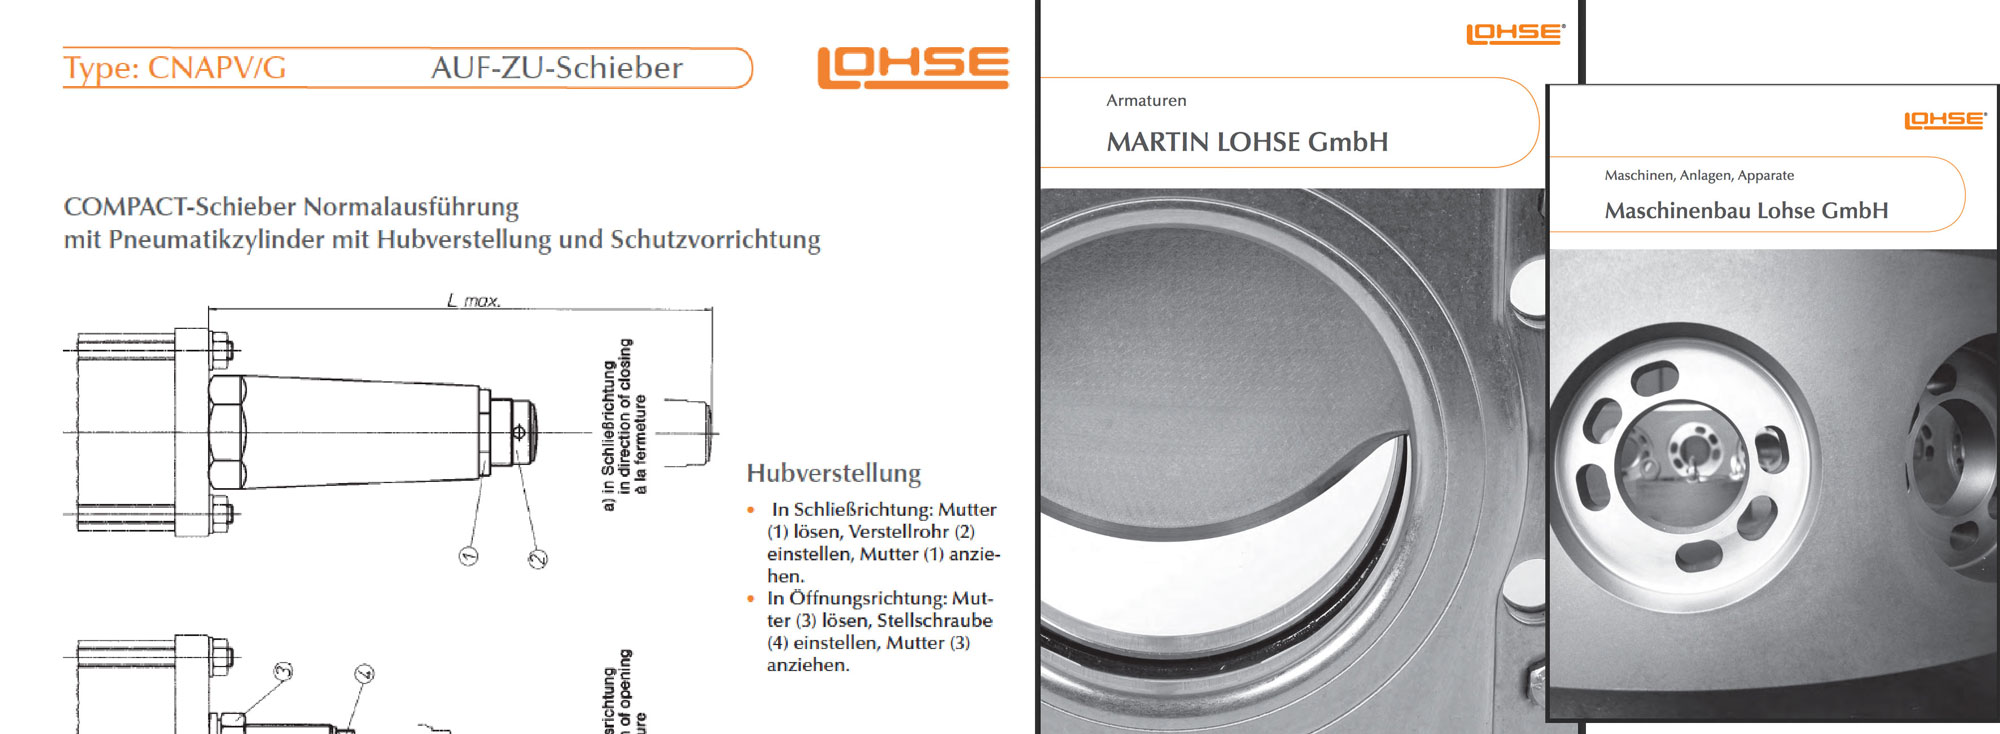 MARTIN LOHSE GmbH